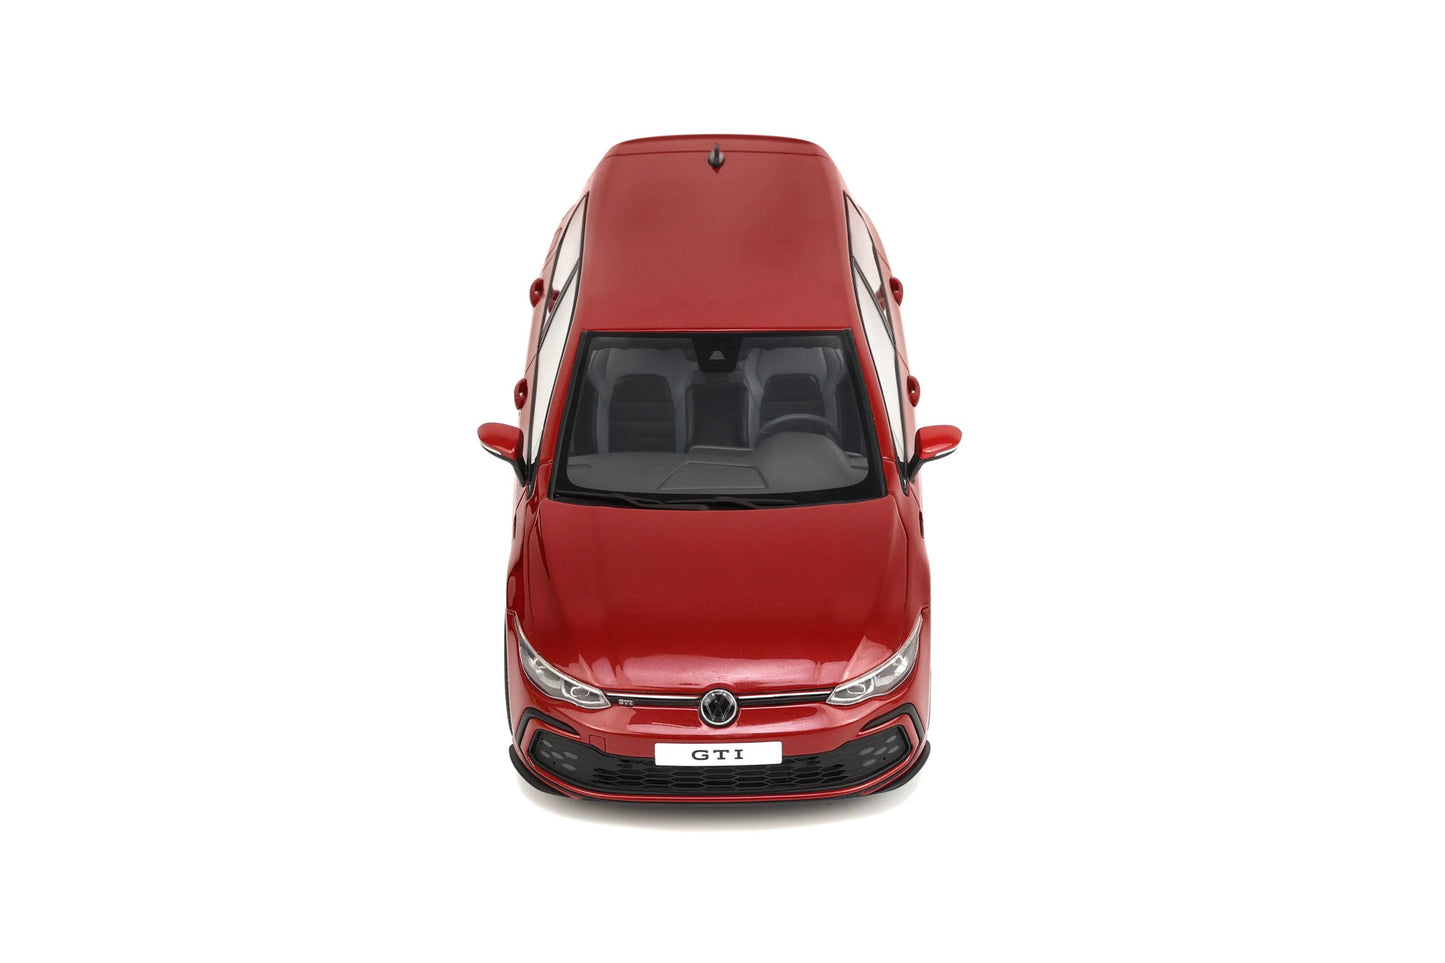 OttOmobile - Volkswagen Golf VIII GTI (Tornado Red) 1:18 Scale Scale Model